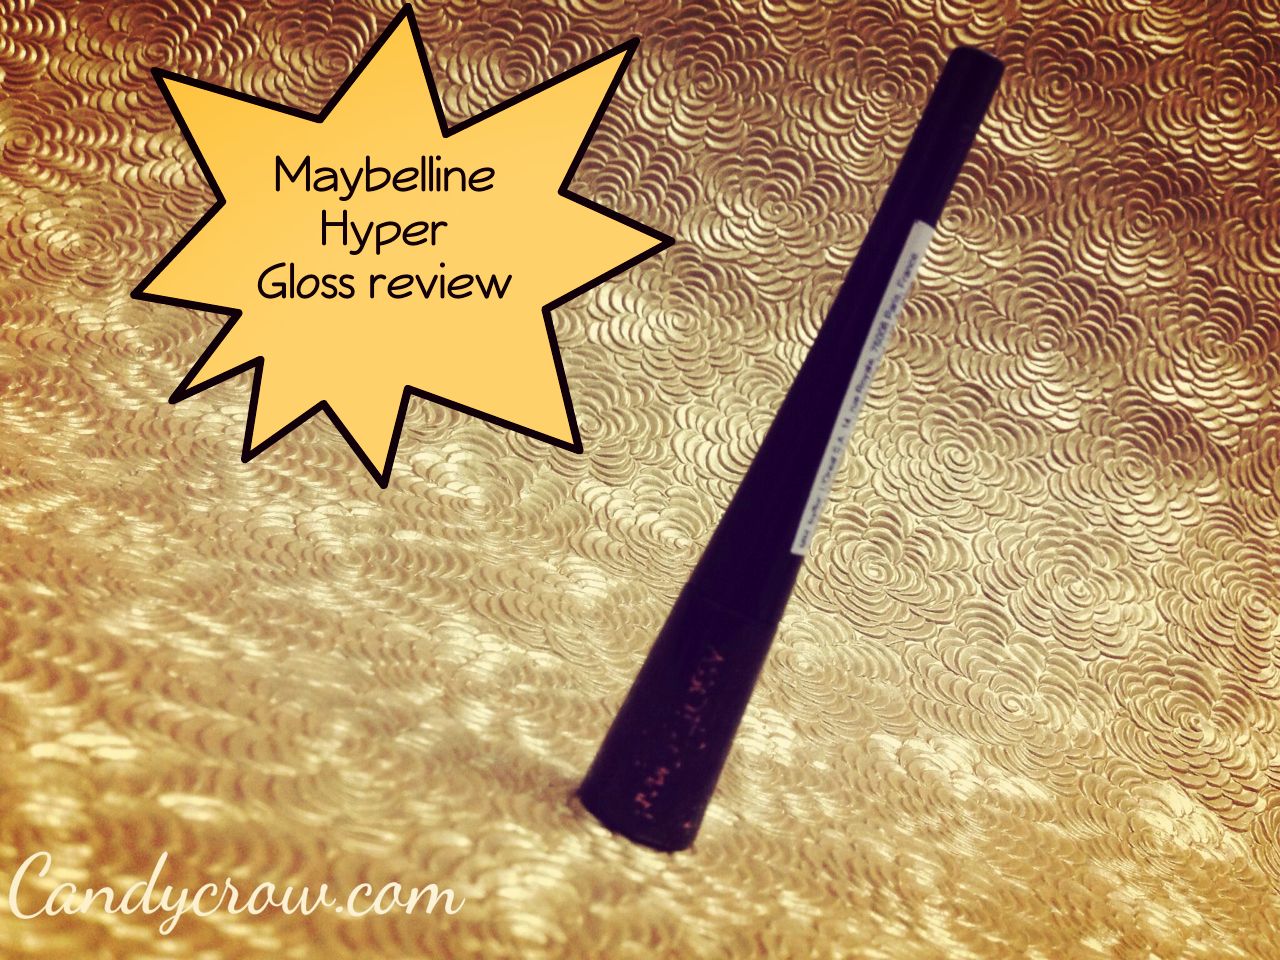 Maybelline Hyper Glossy Liquid Eyeliner Black Review